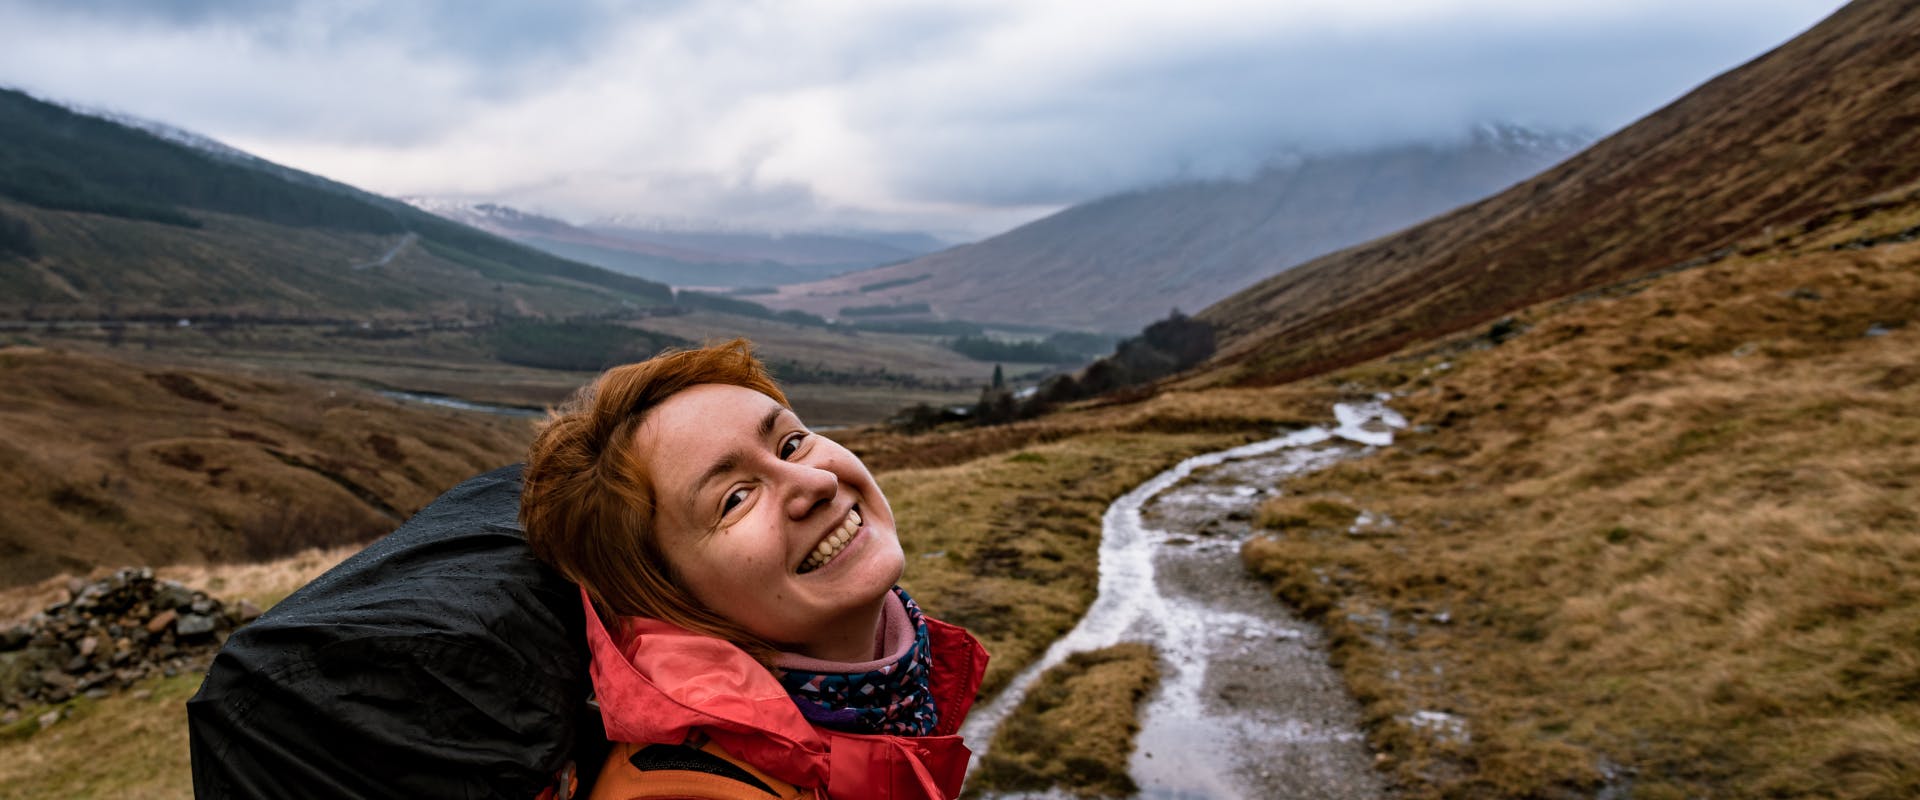 a solo female traveler in scotland walking through the scottish highlands